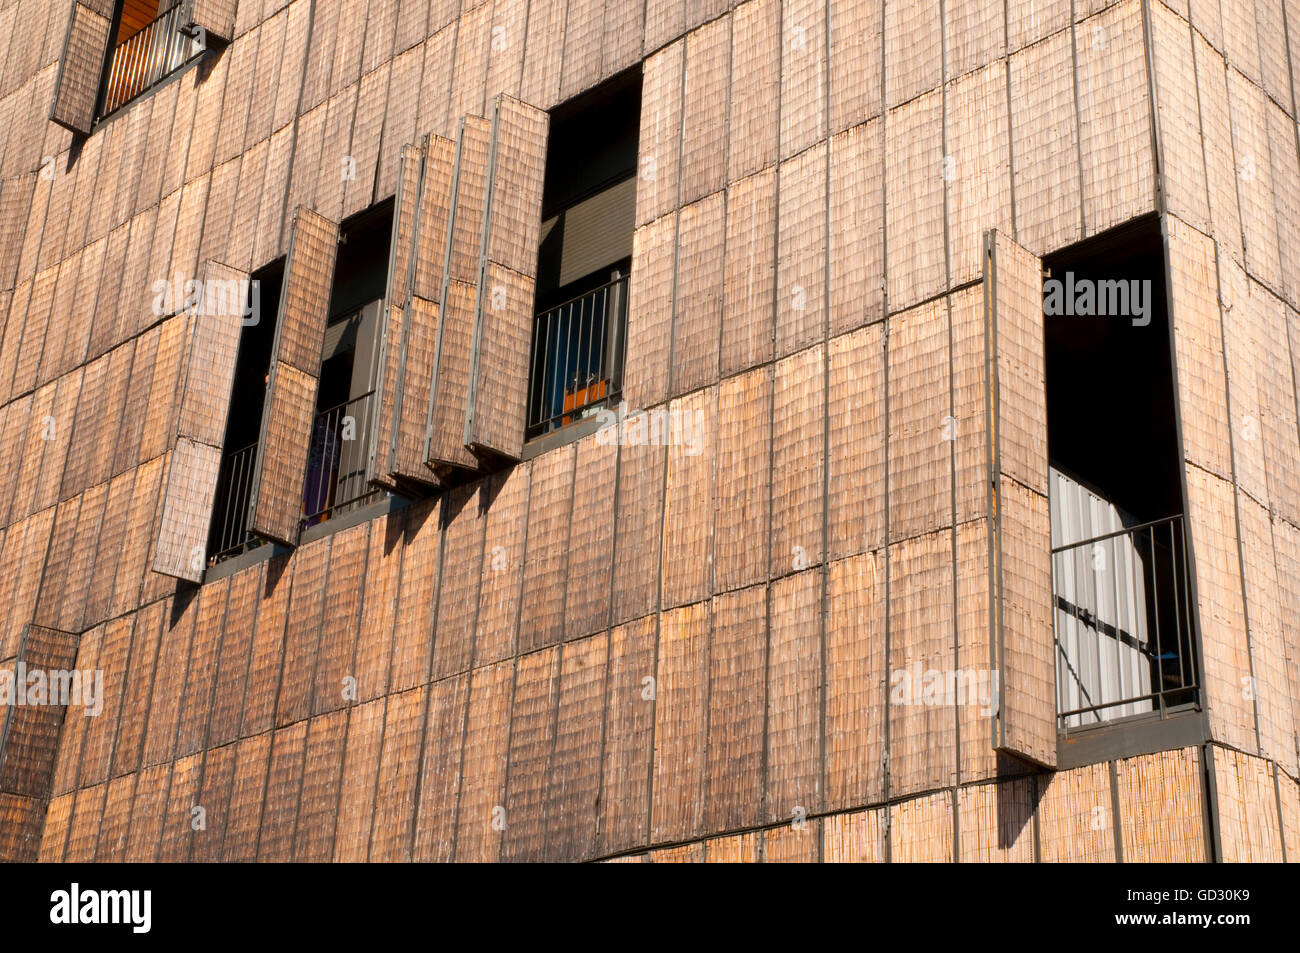 Facade of Bambu building. PAU Carabanchel, Madrid, Spain. Stock Photo